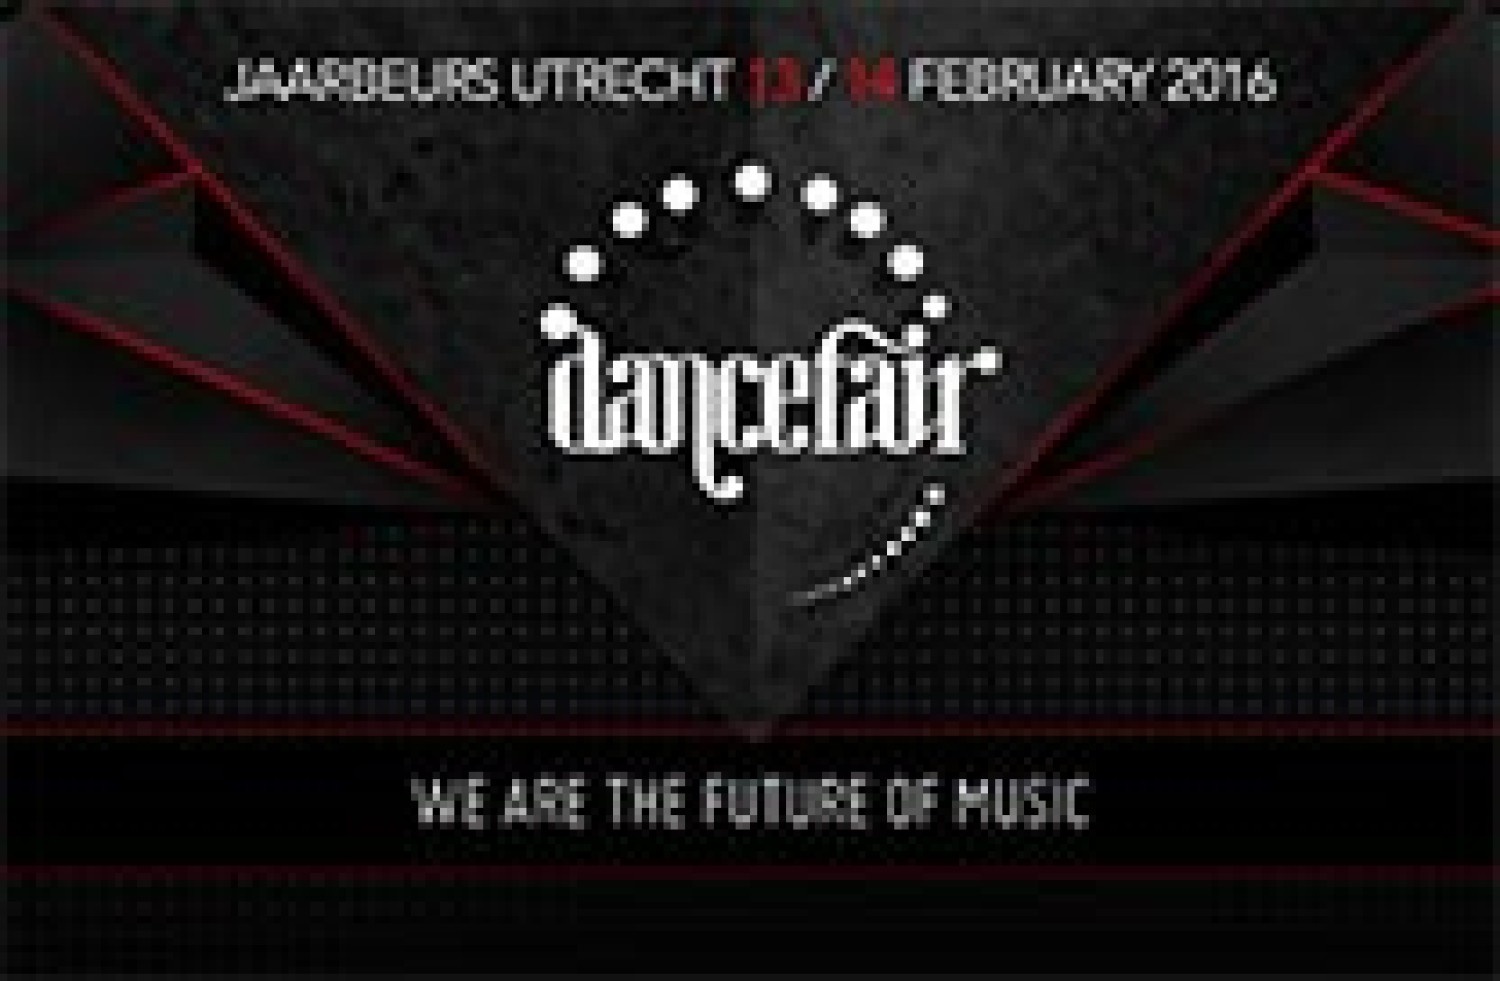 Party report: The Official Dancefair, Utrecht (13-02-2016)